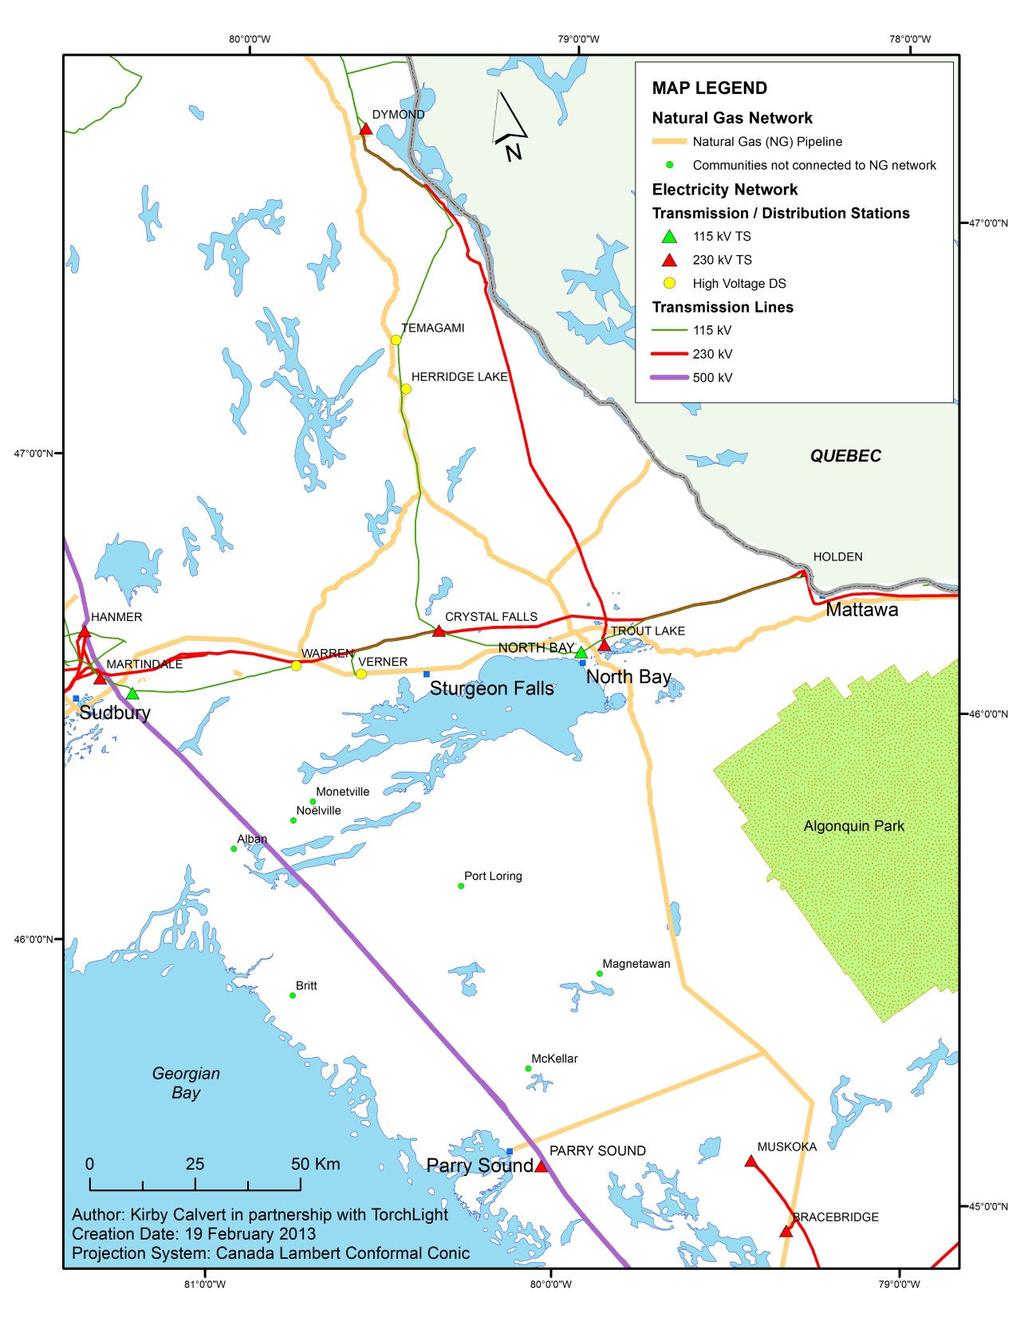 Electricity 2 Lines from Dymondto North Bay (115/230 kv) One 230 kv line E-W Sudbury to Mattawa Main N-S Line from Sudbury to